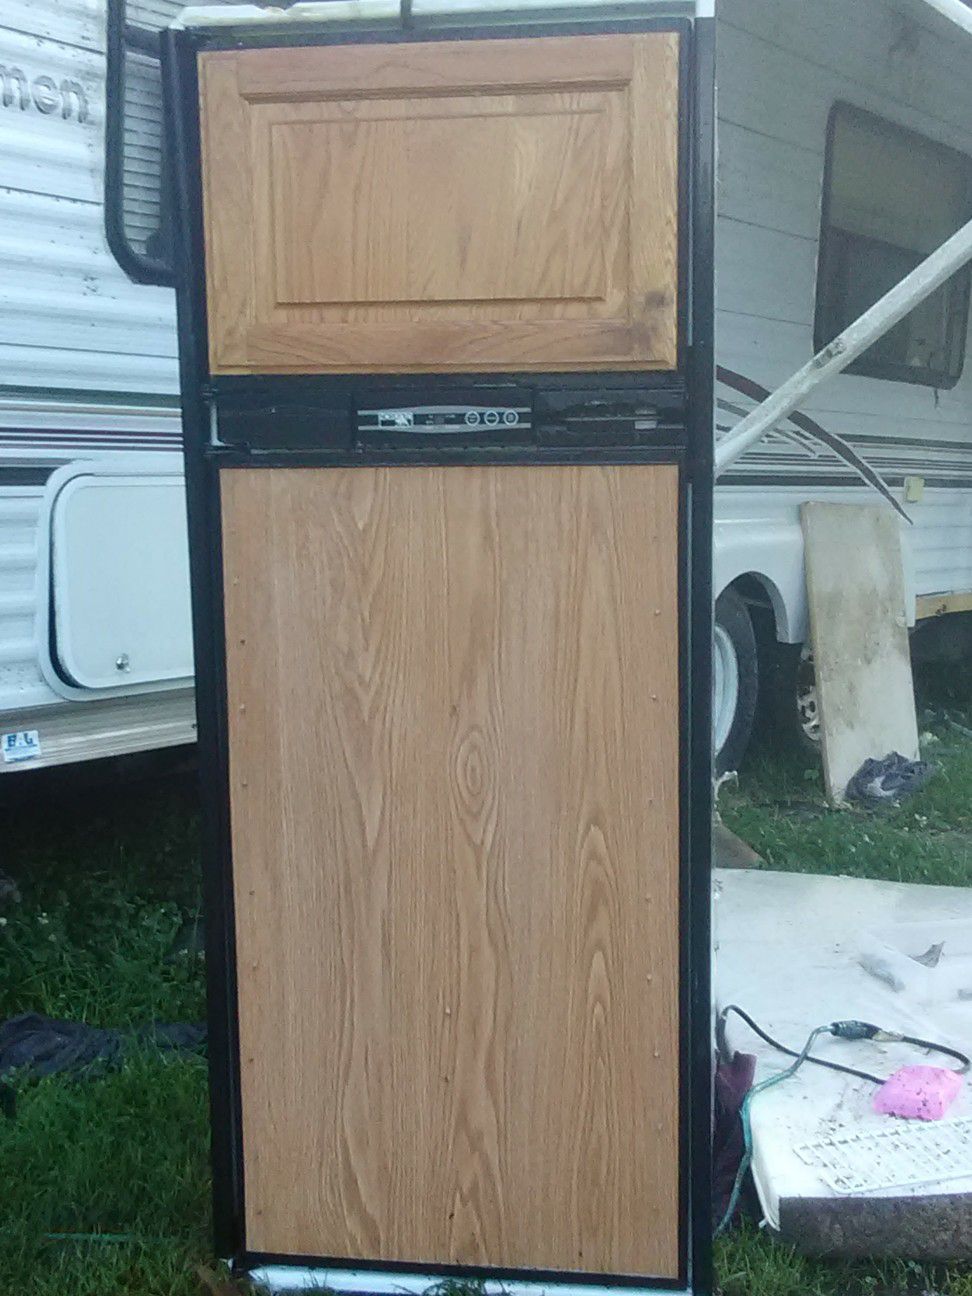 Camper refrigerator